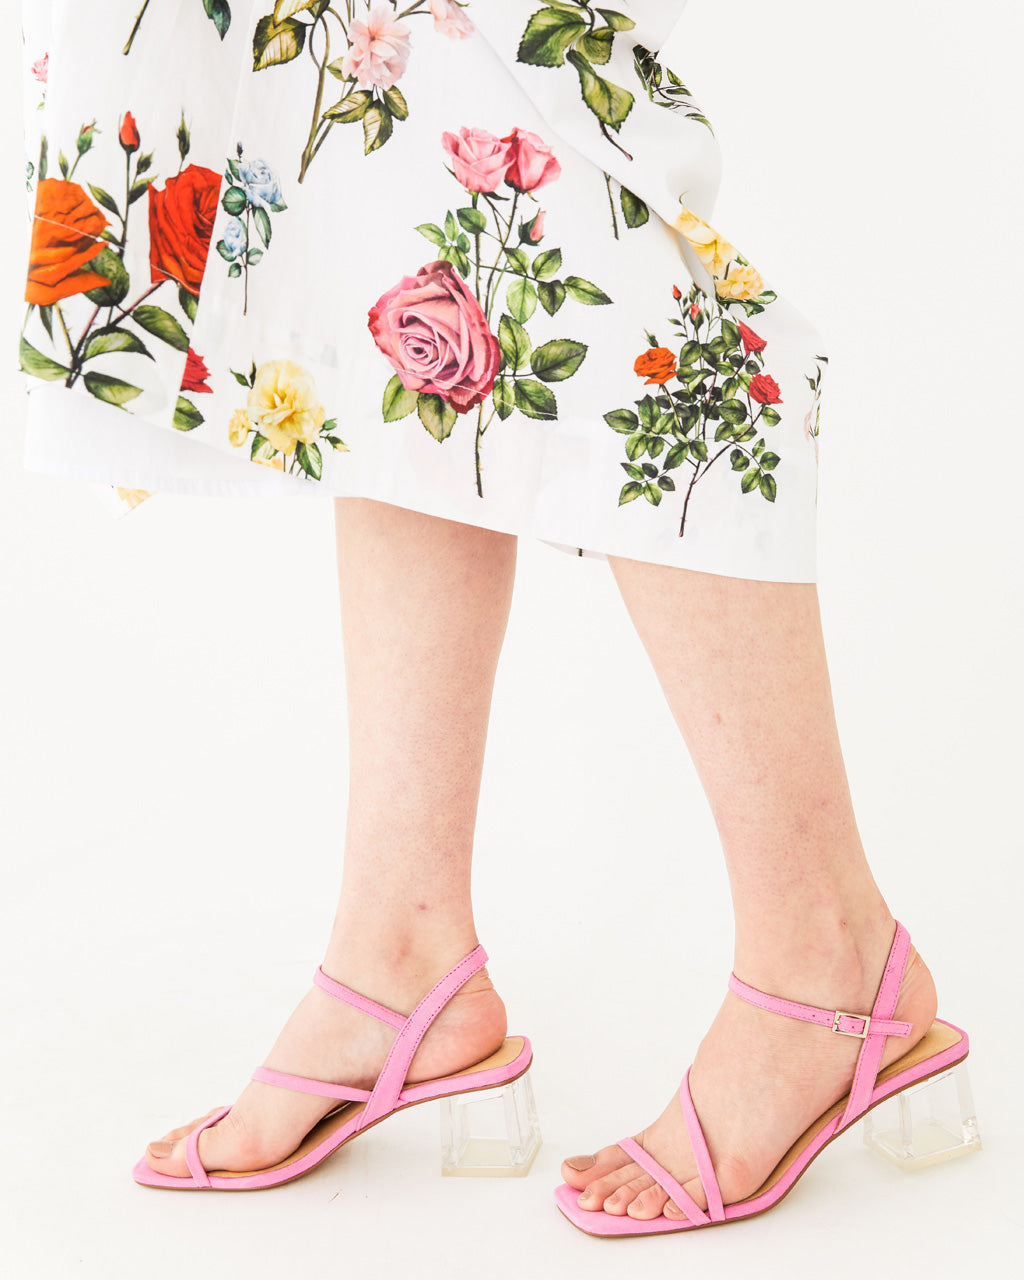 rose pink sandal heels